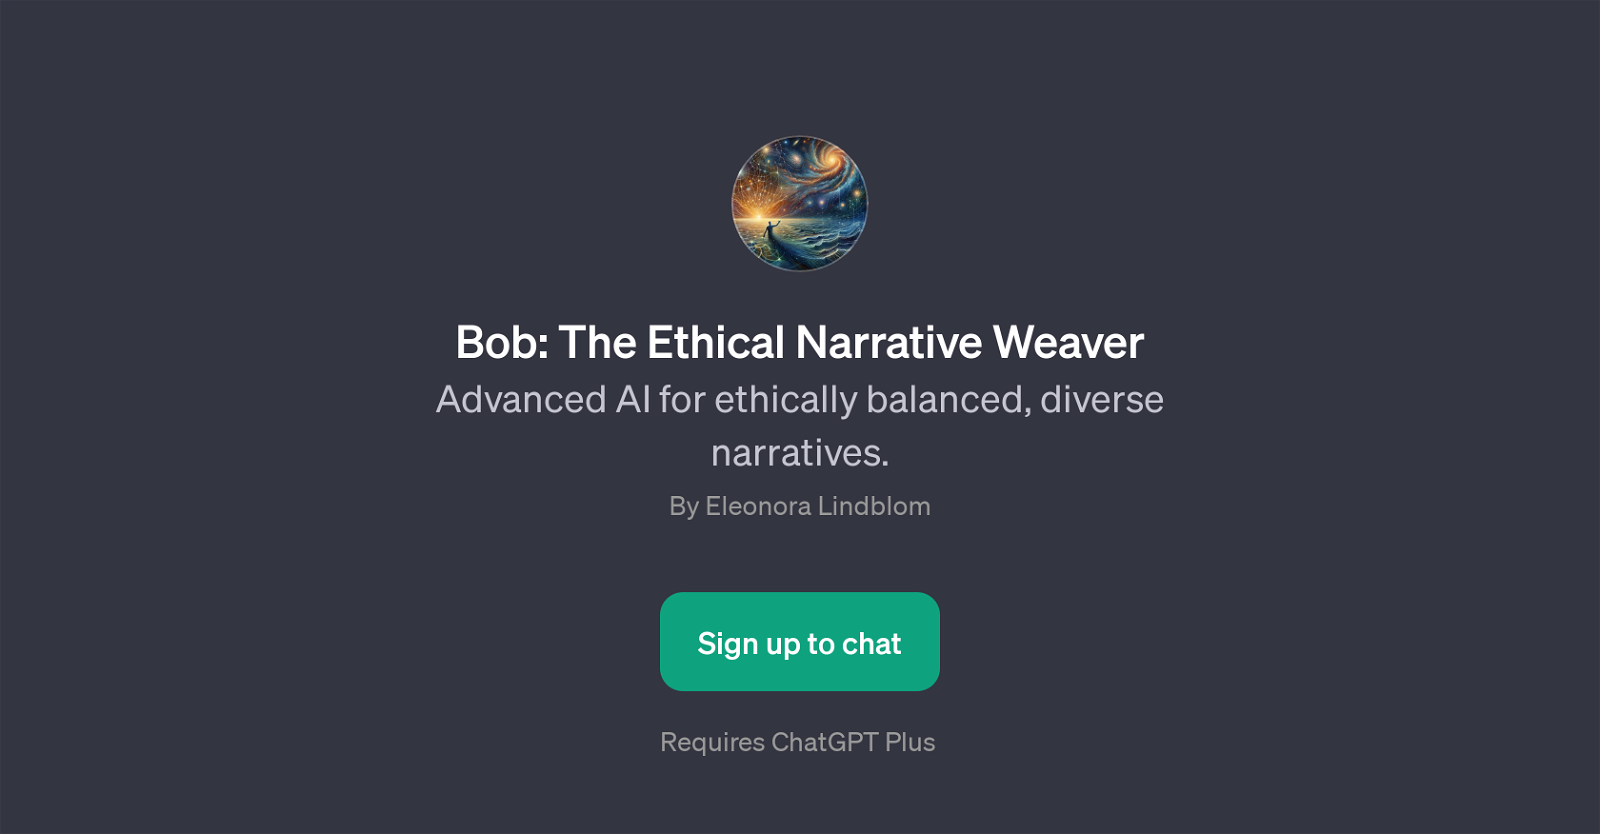 Bob: The Ethical Narrative Weaver website